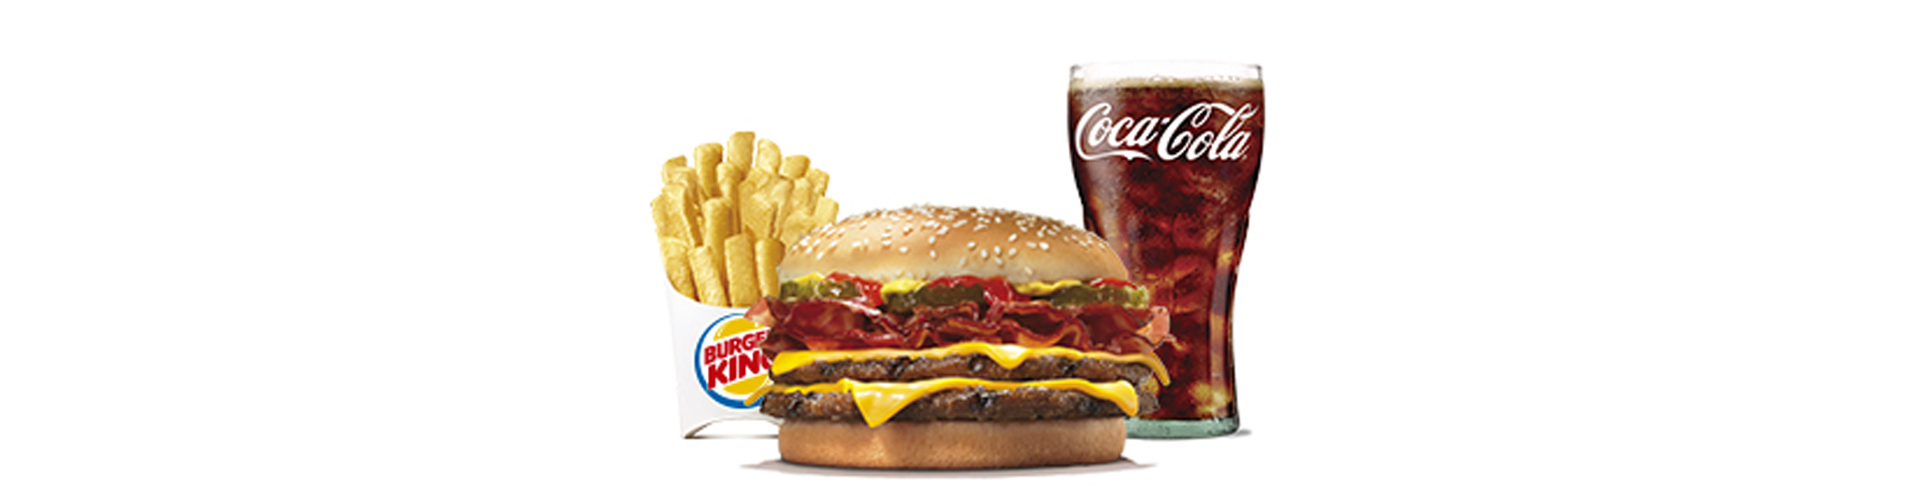 burgerking-40001718-sprite-ensalada